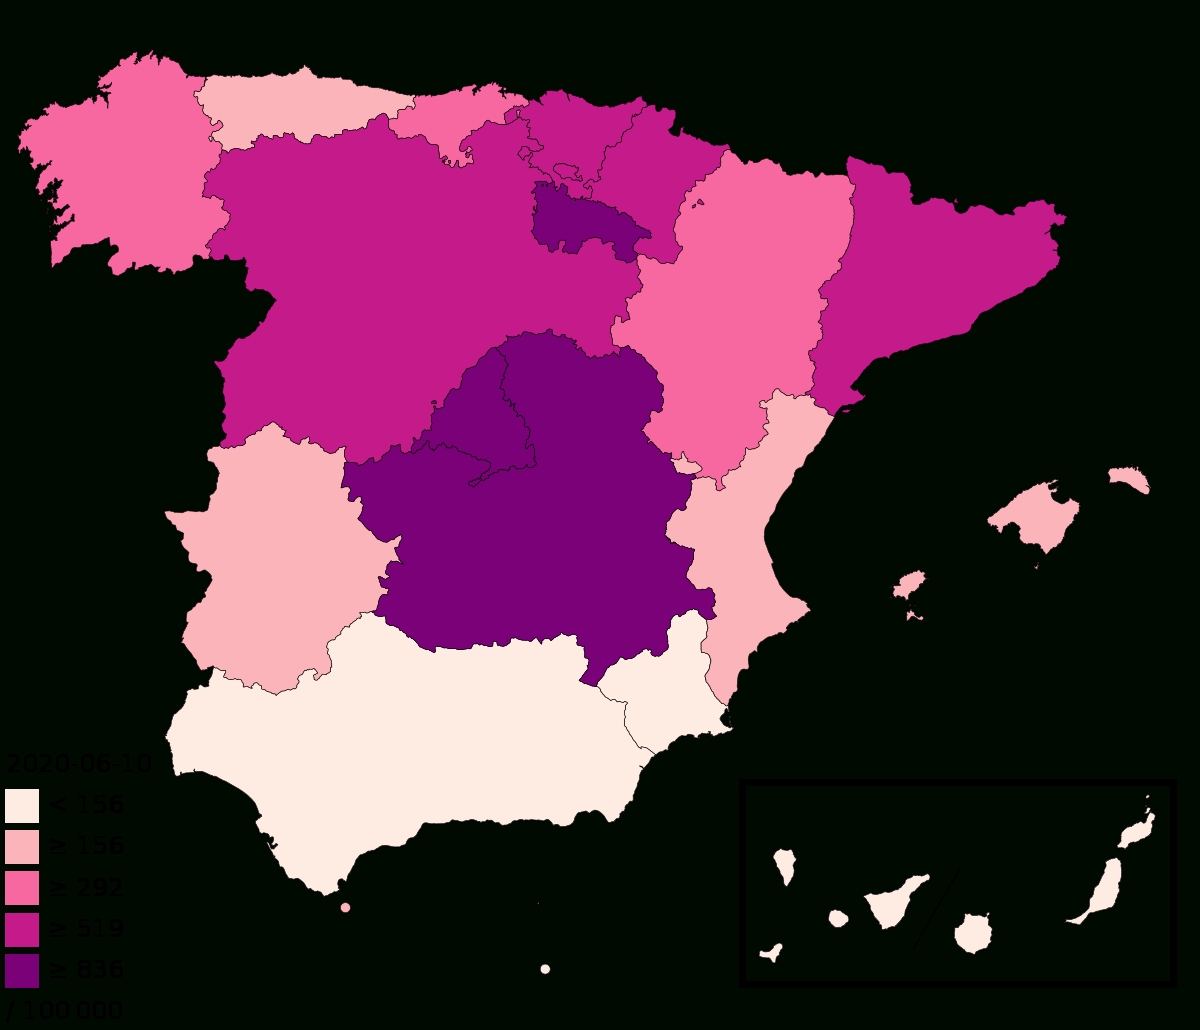 Covid-19 Pandemic In Spain - Wikipedia